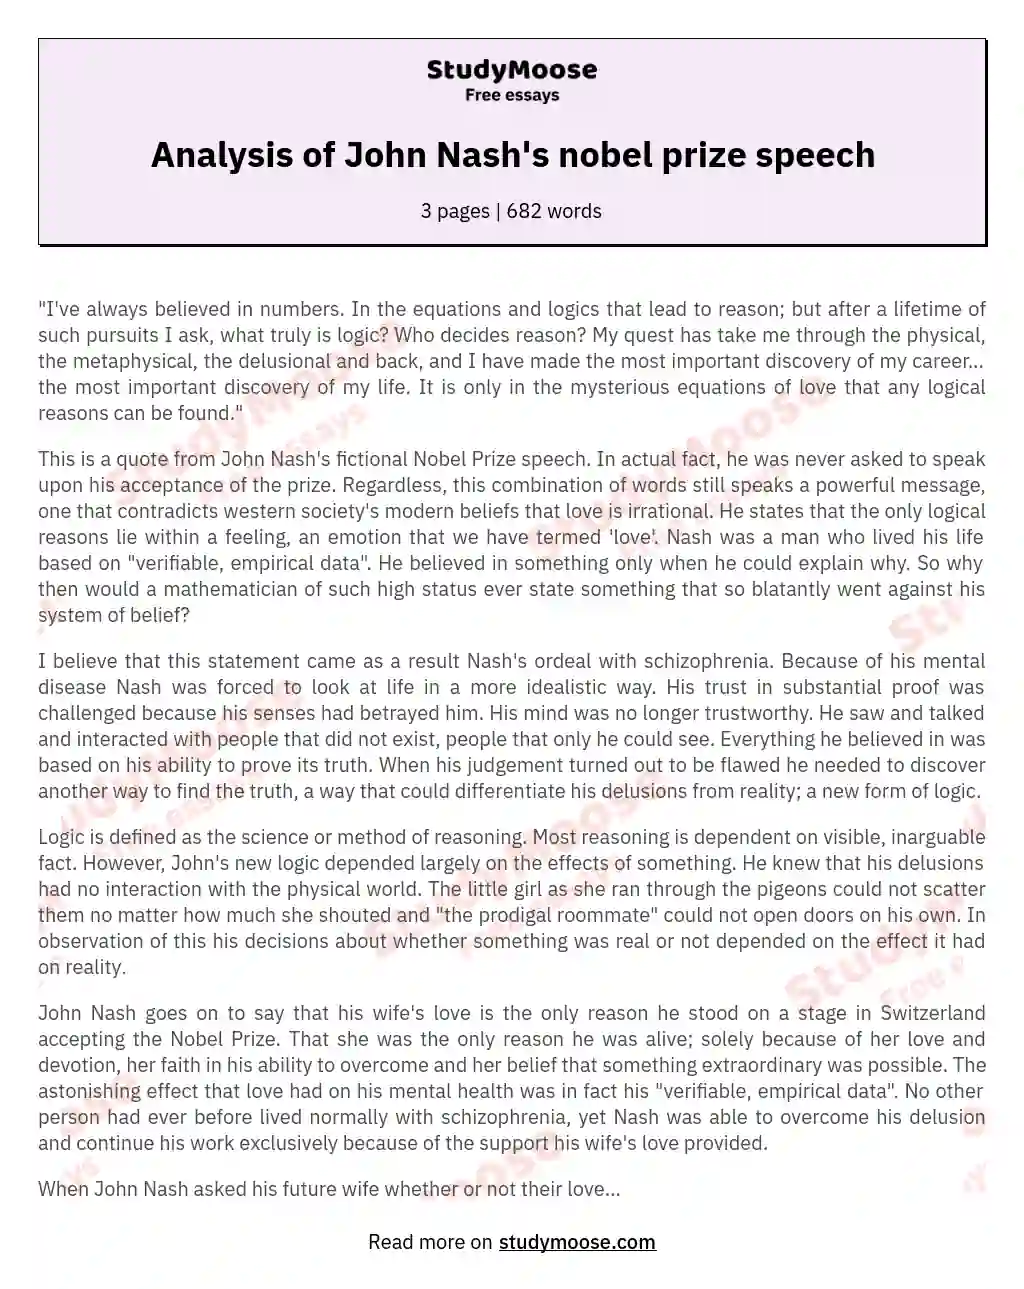 Analysis of John Nash's nobel prize speech essay